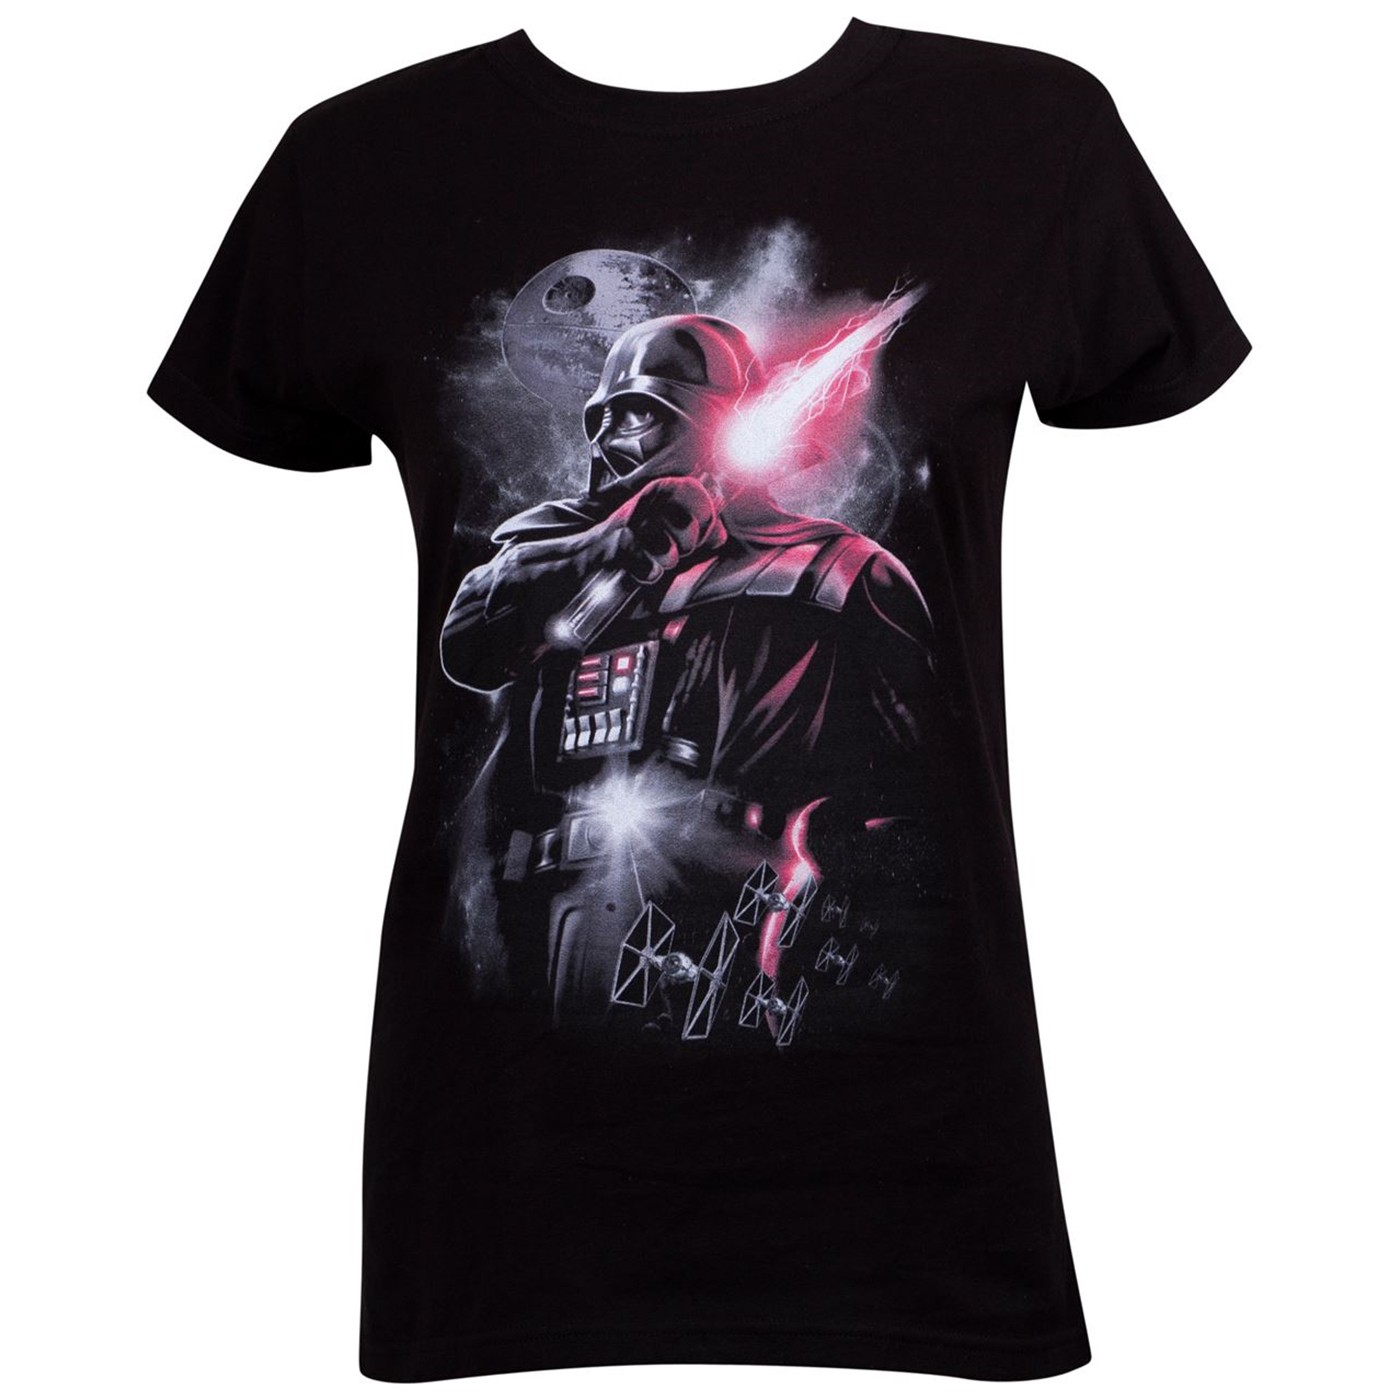 Star Wars Epic Darth Vader Black Women's T-Shirt